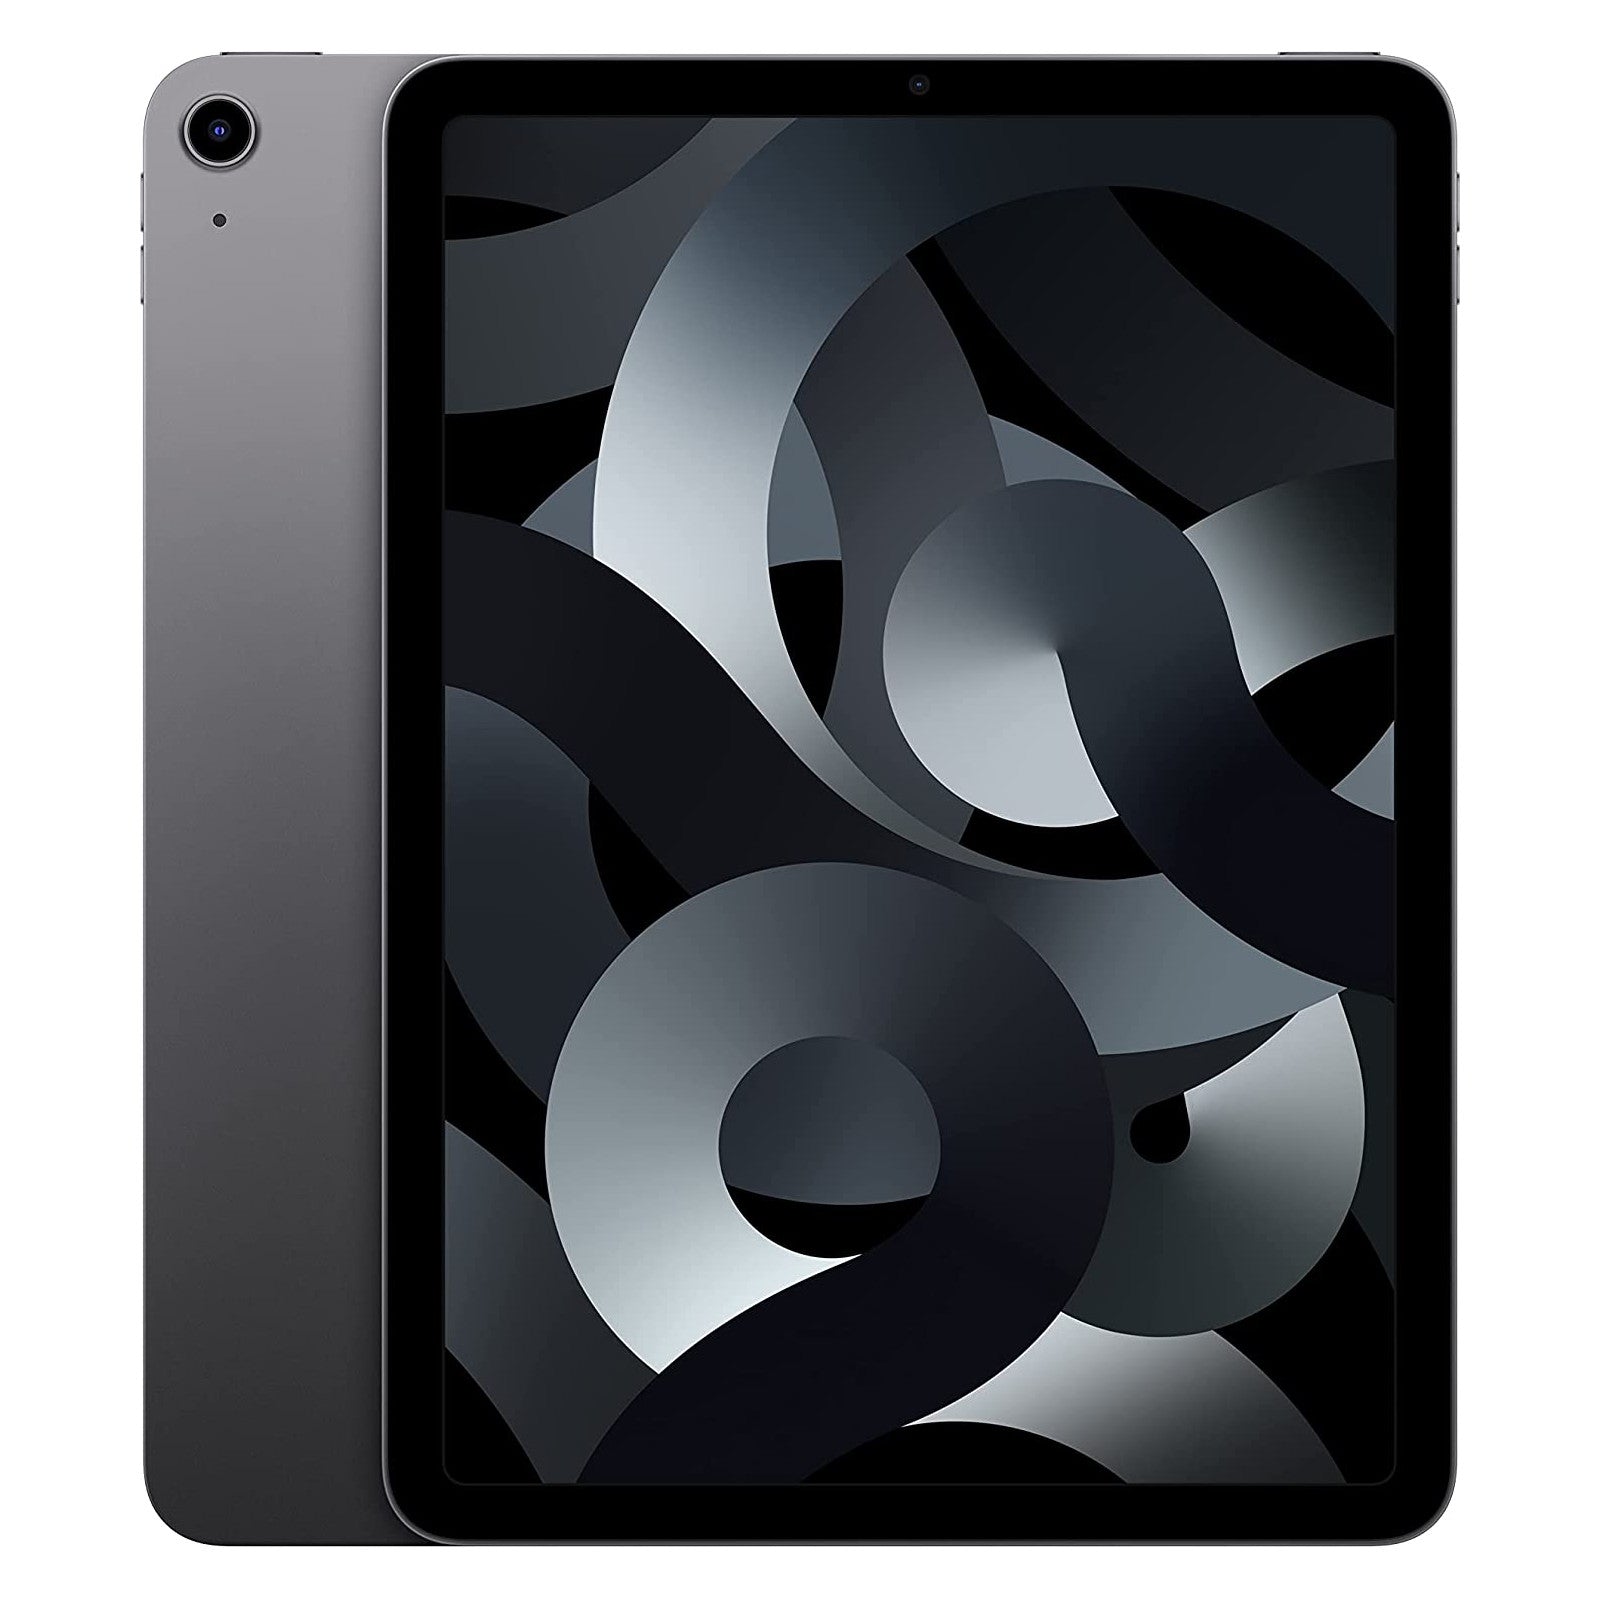 iPad Air 5 256GB WiFi in Space Grey - Pristine condition 256GB Space Grey Pristine